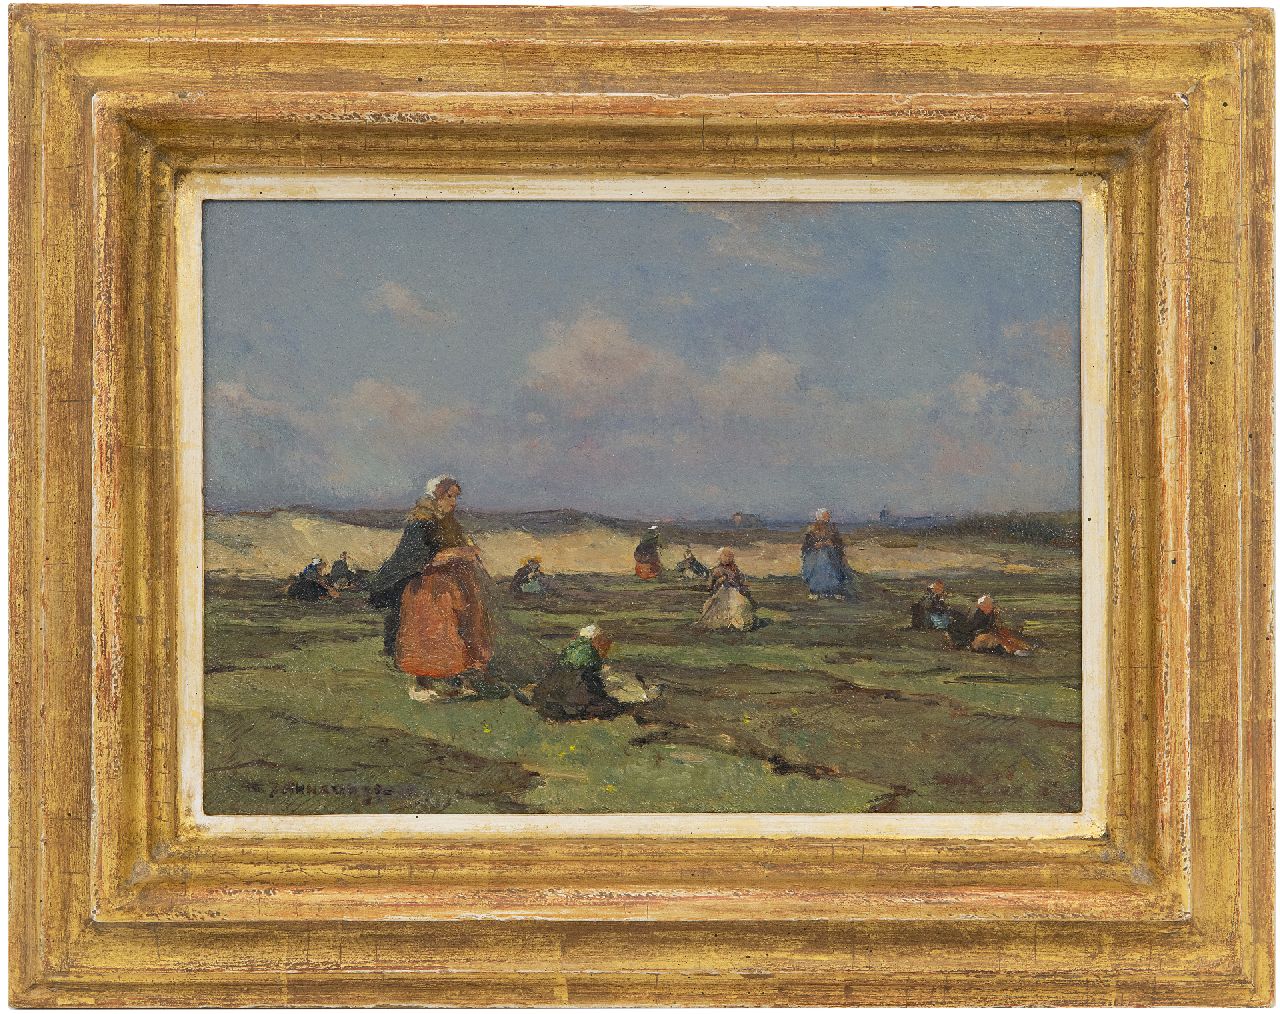 Akkeringa J.E.H.  | 'Johannes Evert' Hendrik Akkeringa, Nettenboetsters in de duinen, olieverf op paneel 17,2 x 24,3 cm, gesigneerd linksonder